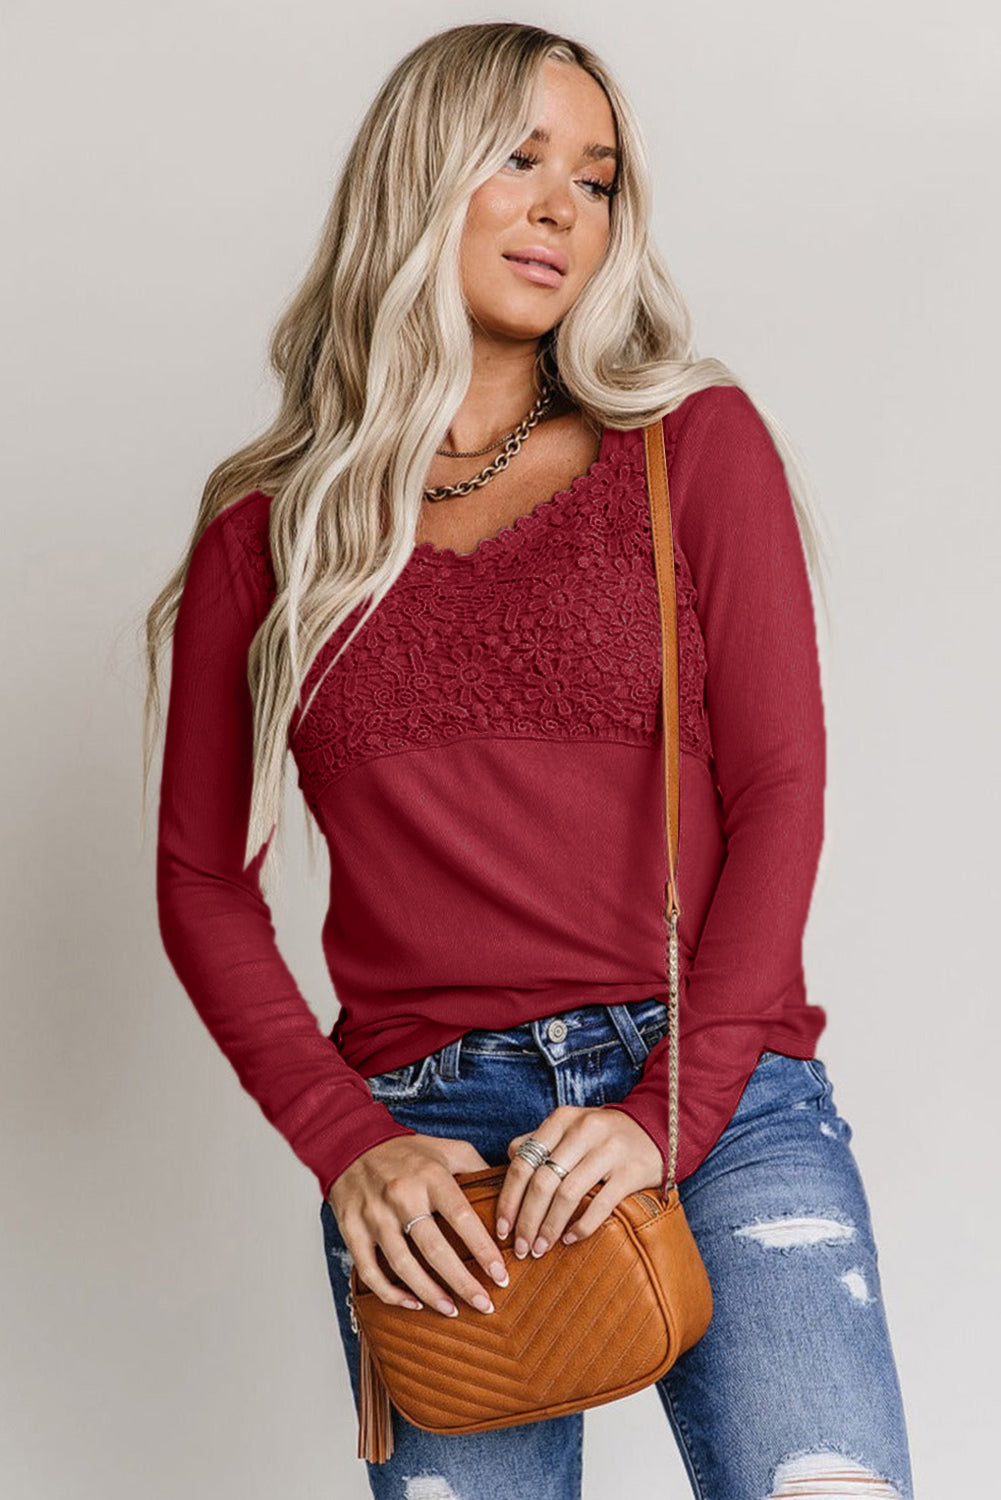 Lace Crochet V Neck Long Sleeve Top